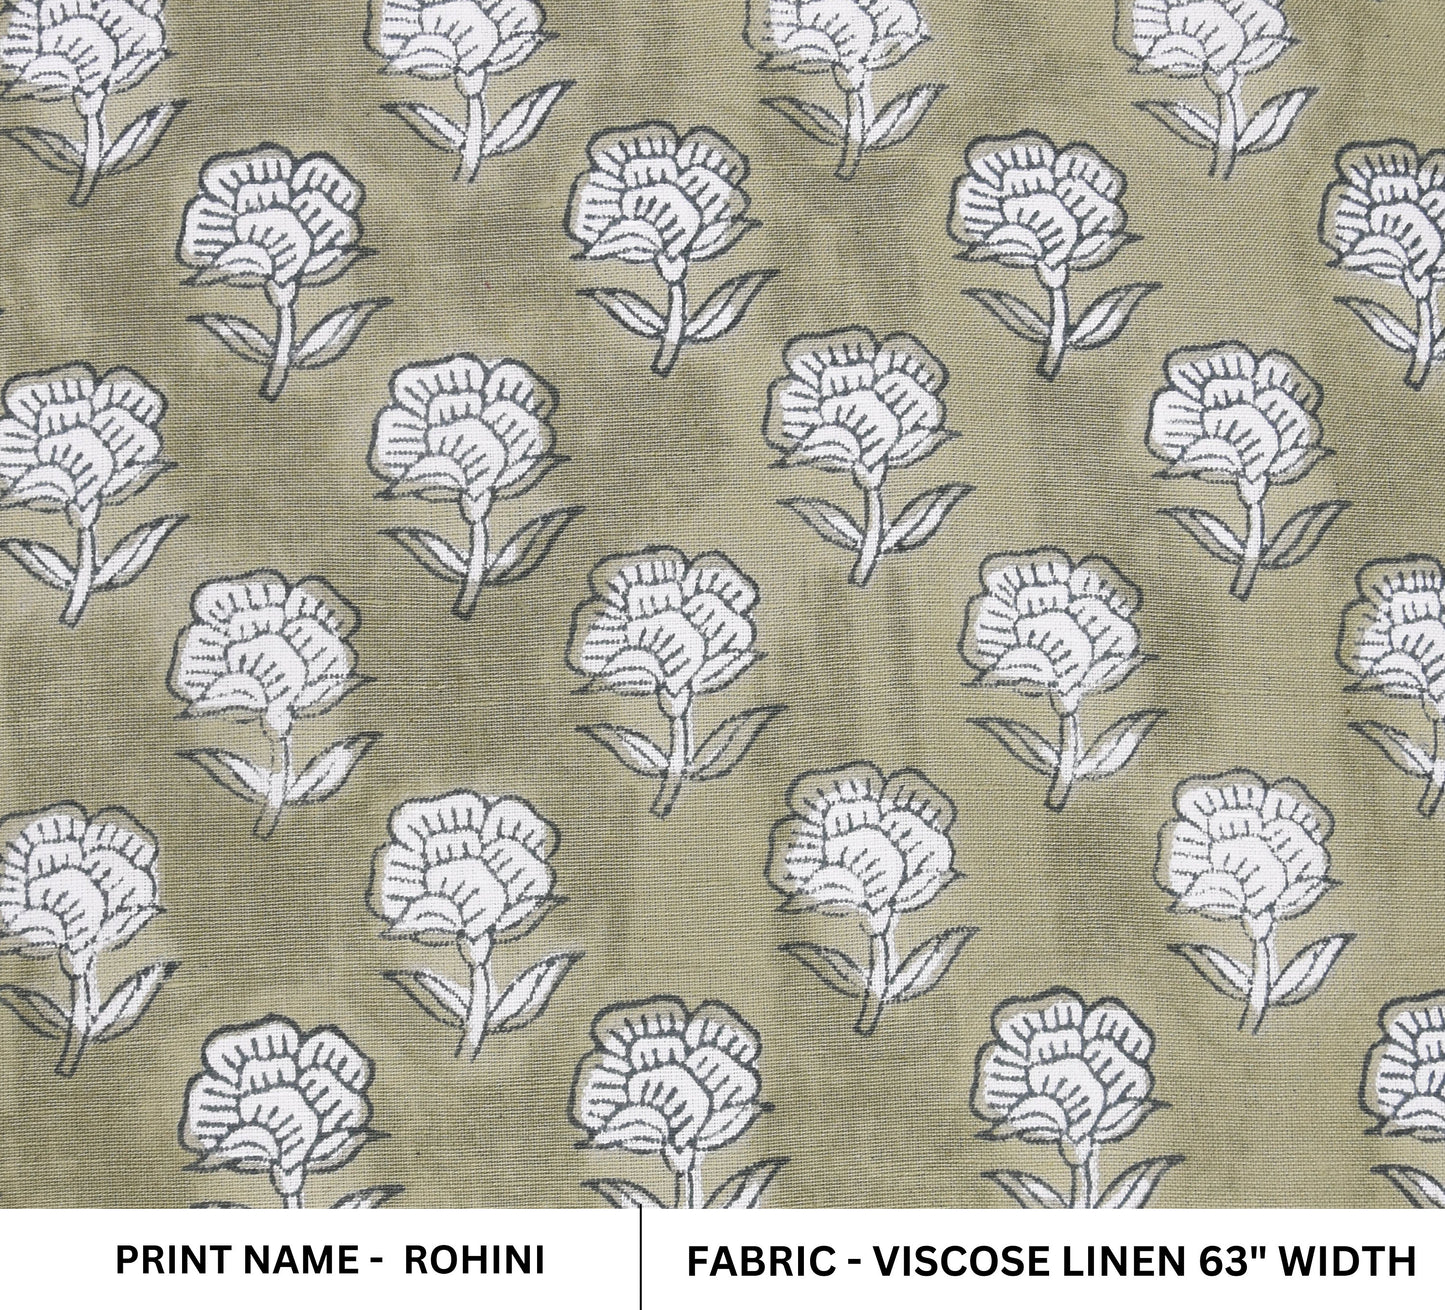 Block print Viscose linen fabric fabritual